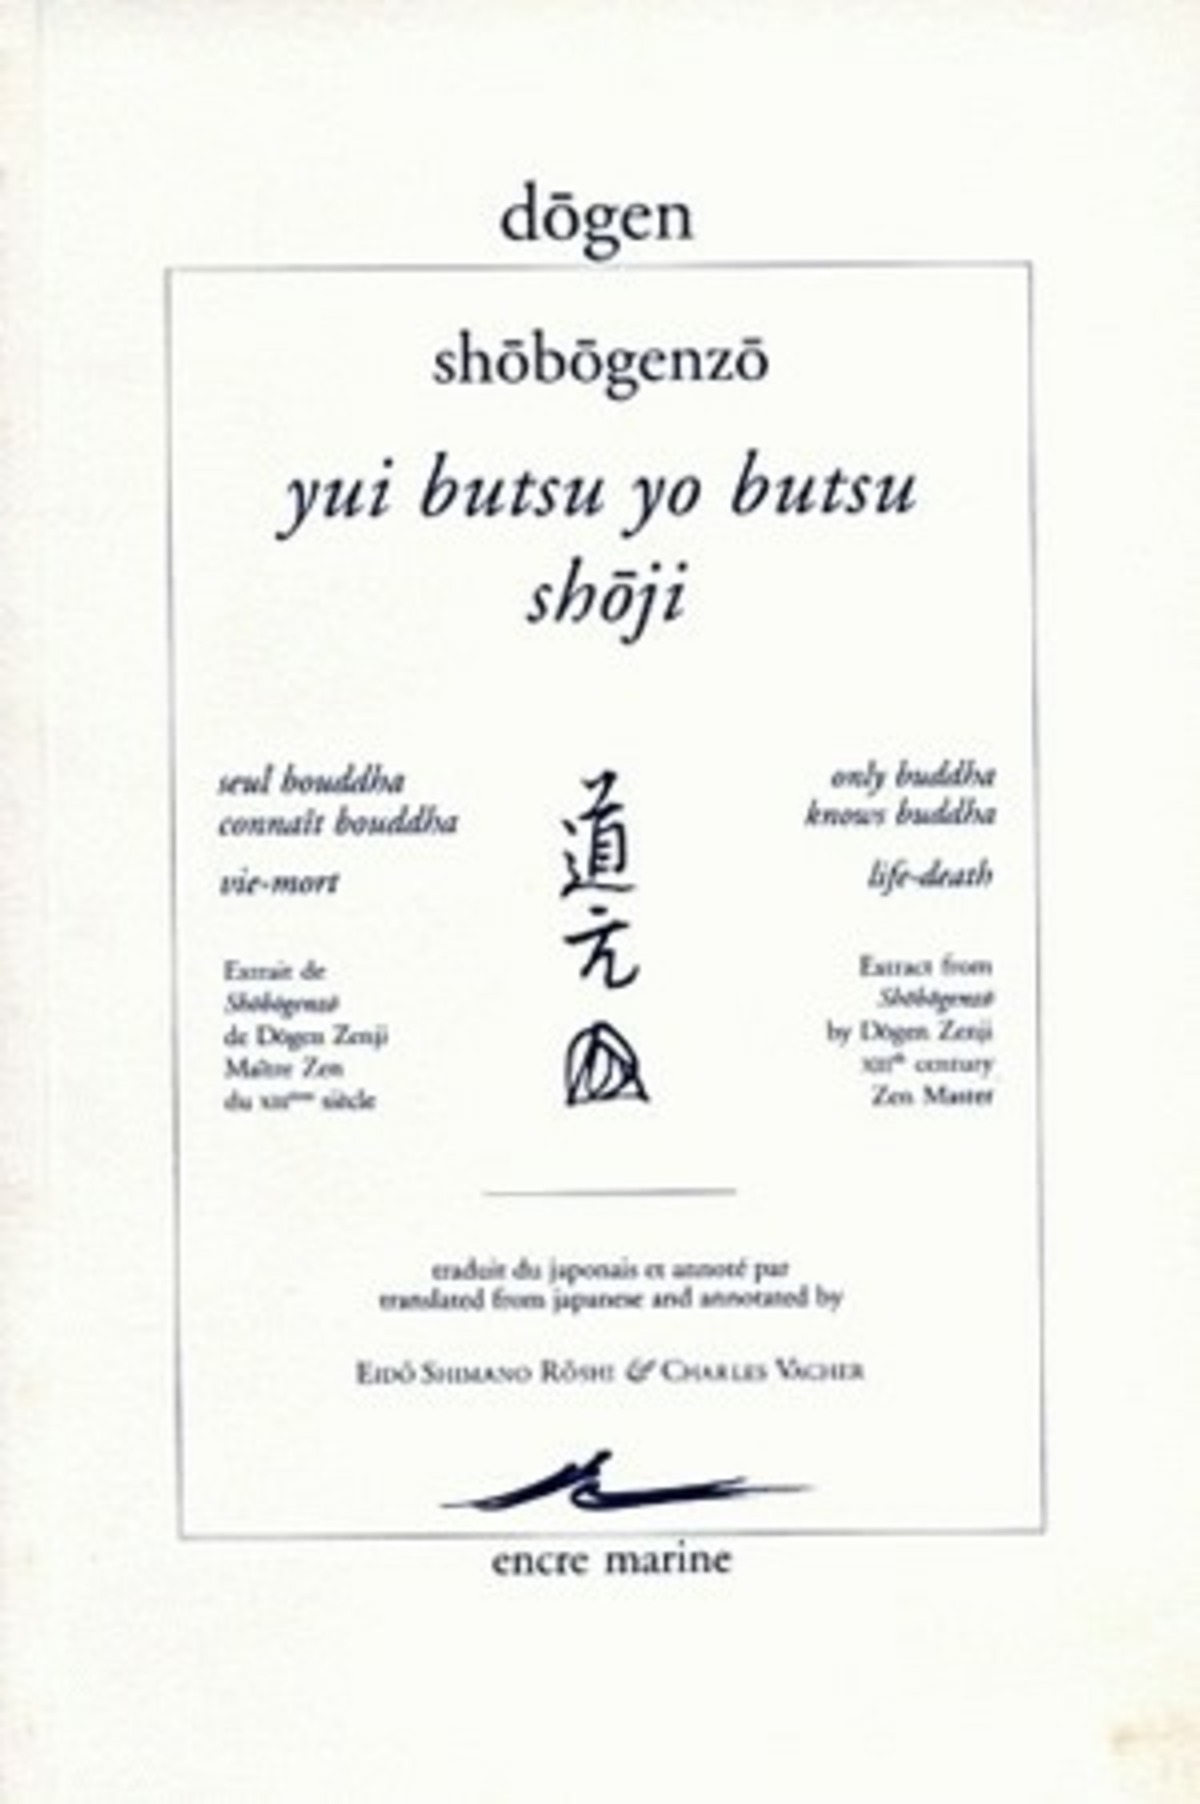 Yui butsu Yo butsu - Shōji / Seul bouddha connaît bouddha - Vie-mort